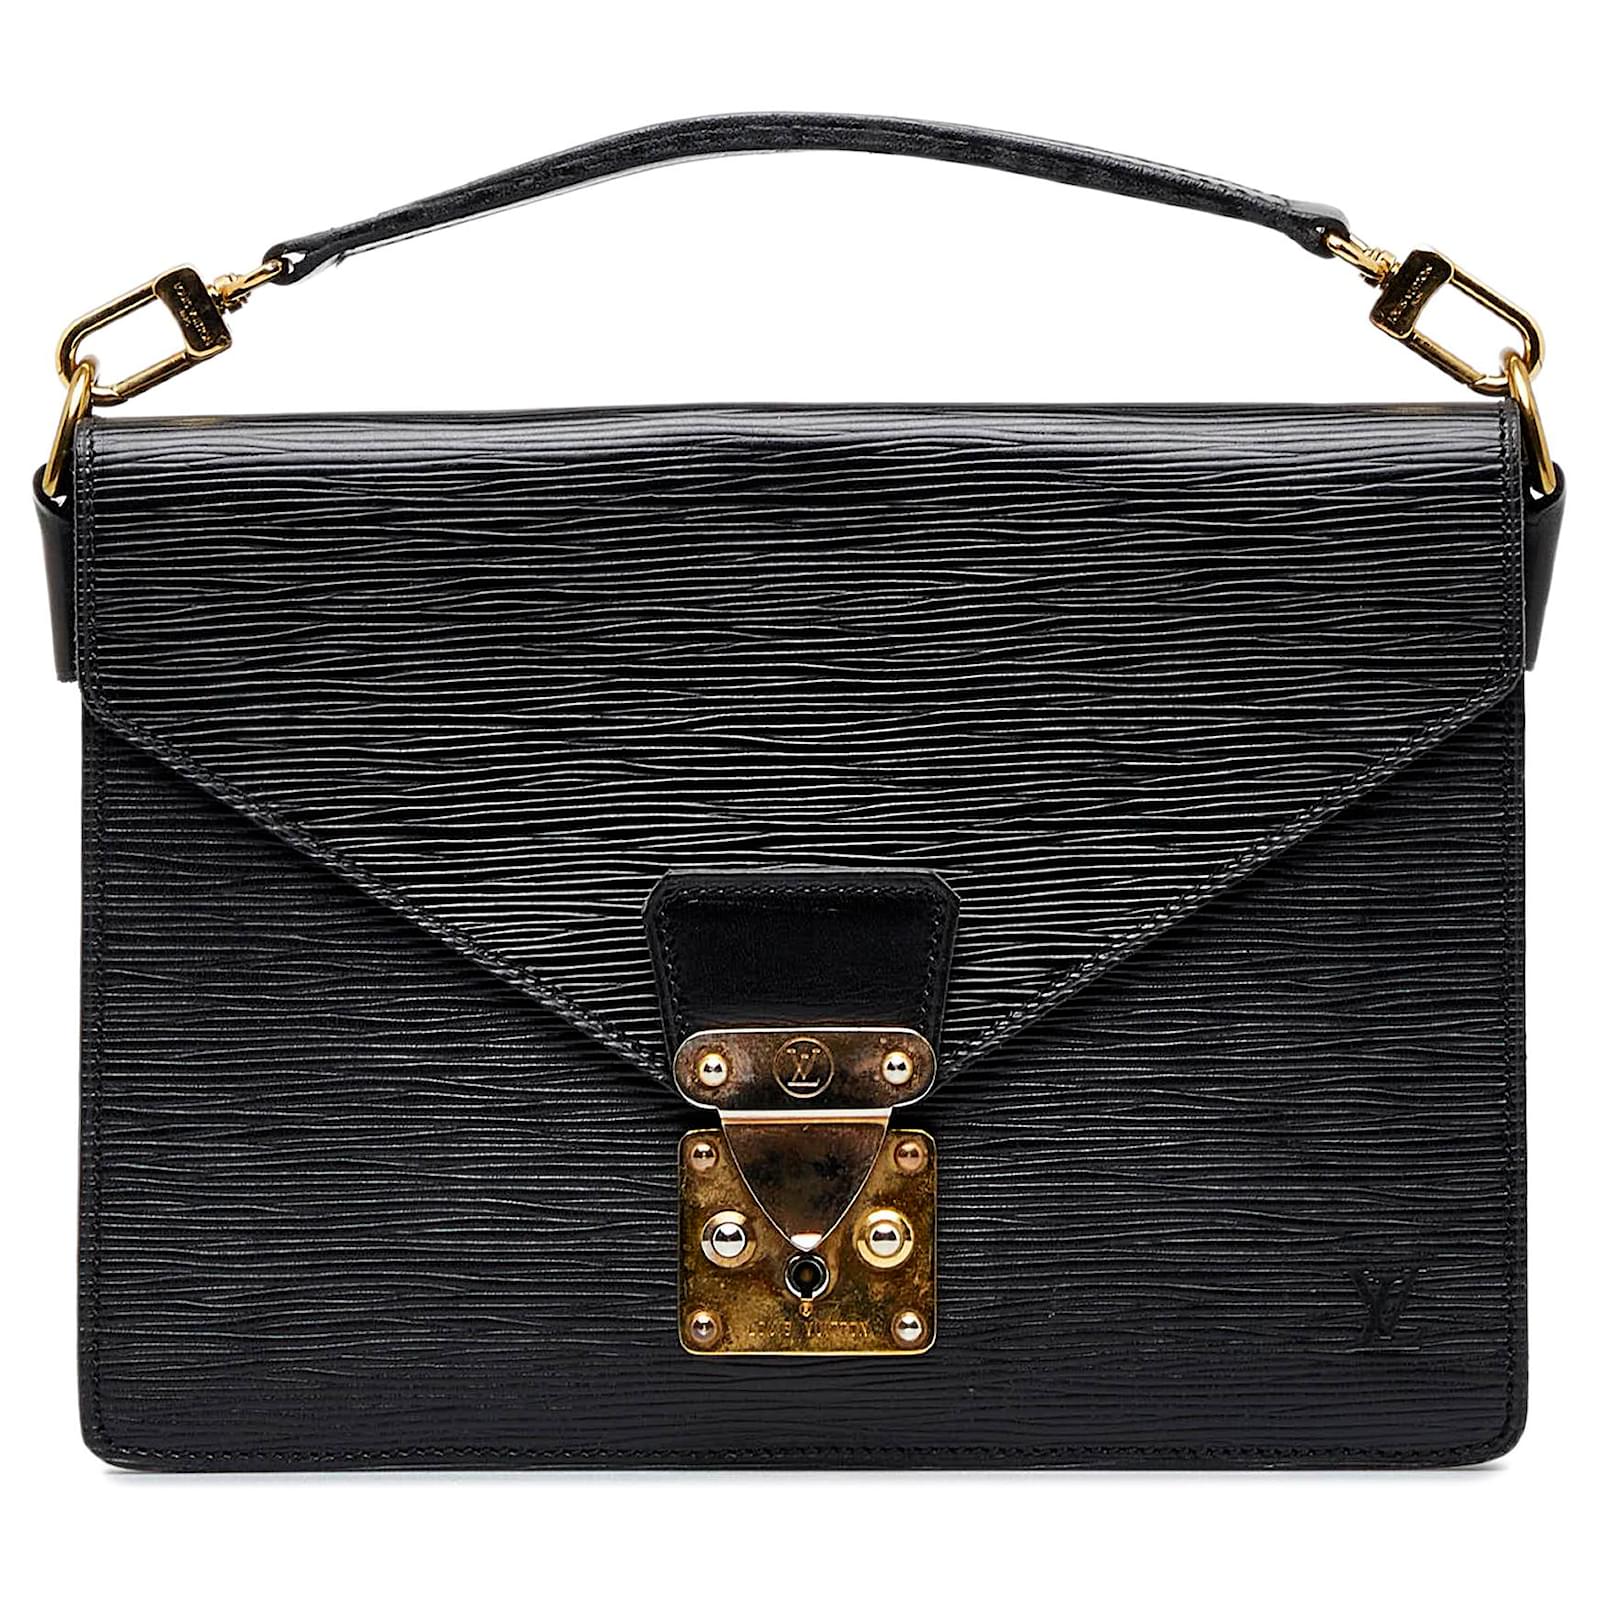 Neo Monceau leather handbag